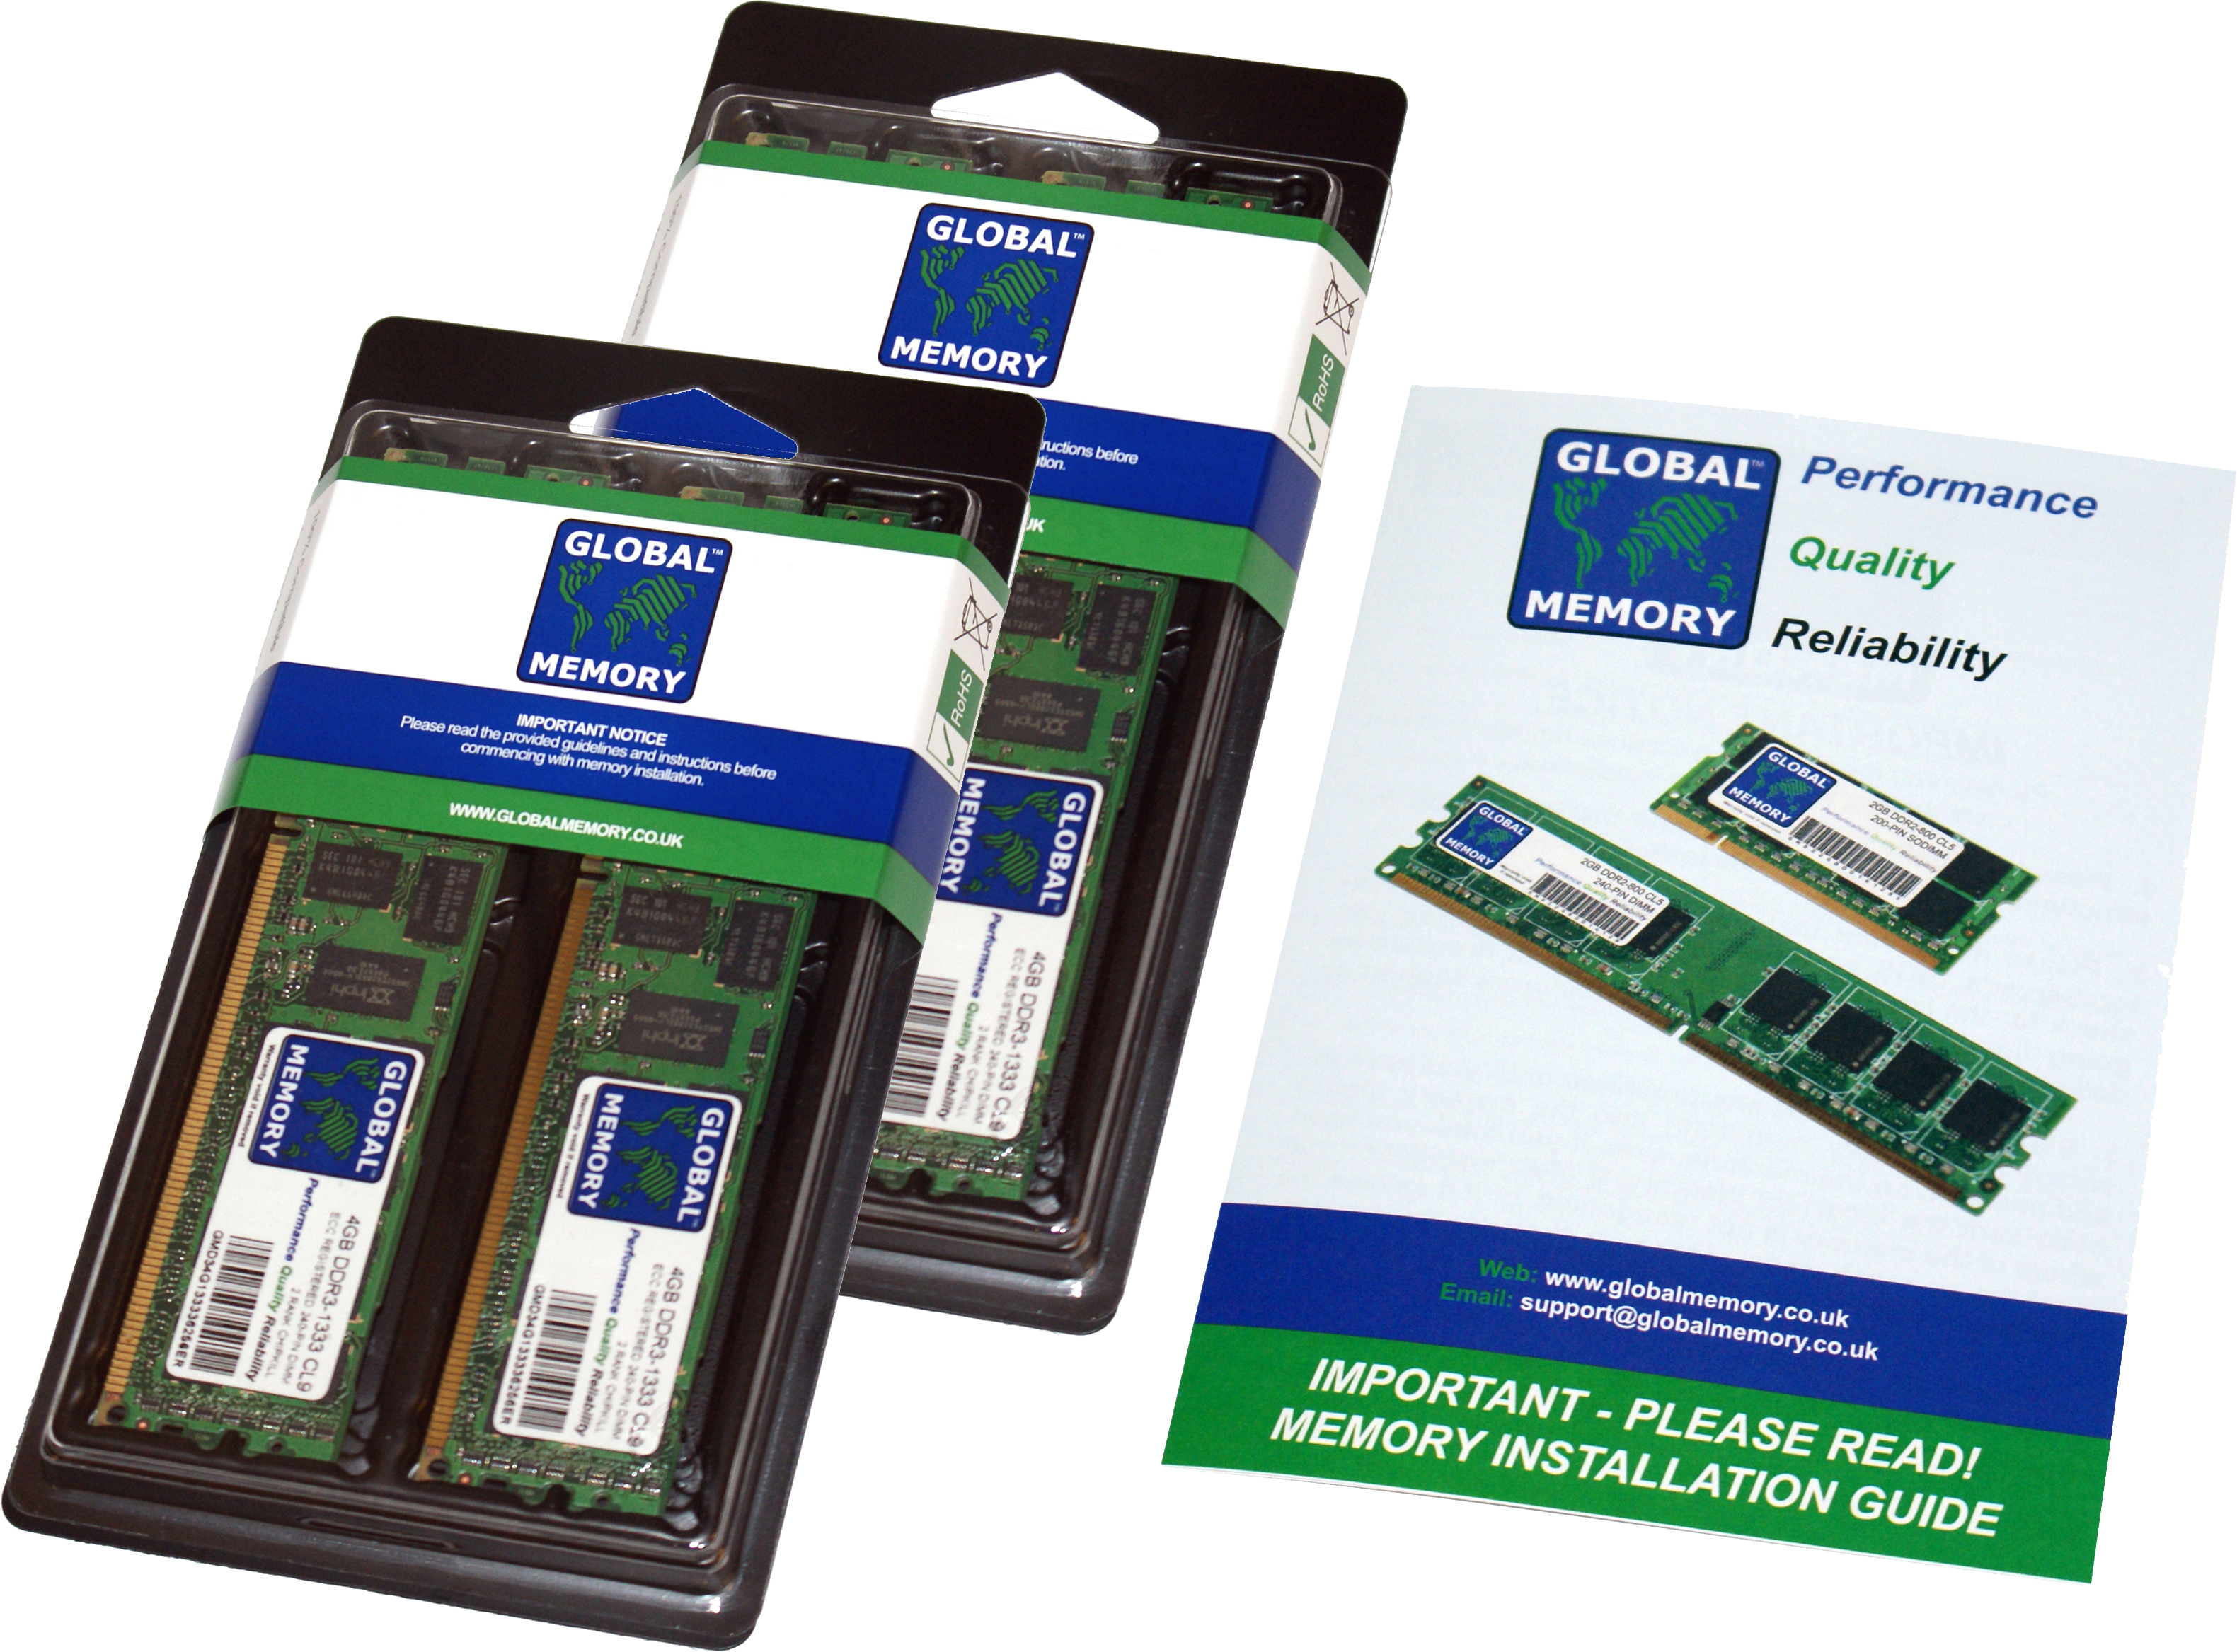 64GB (4 x 16GB) DDR4 2400MHz PC4-19200 288-PIN ECC REGISTERED DIMM (RDIMM) MEMORY RAM KIT FOR SERVERS/WORKSTATIONS/MOTHERBOARDS (8 RANK KIT CHIPKILL)